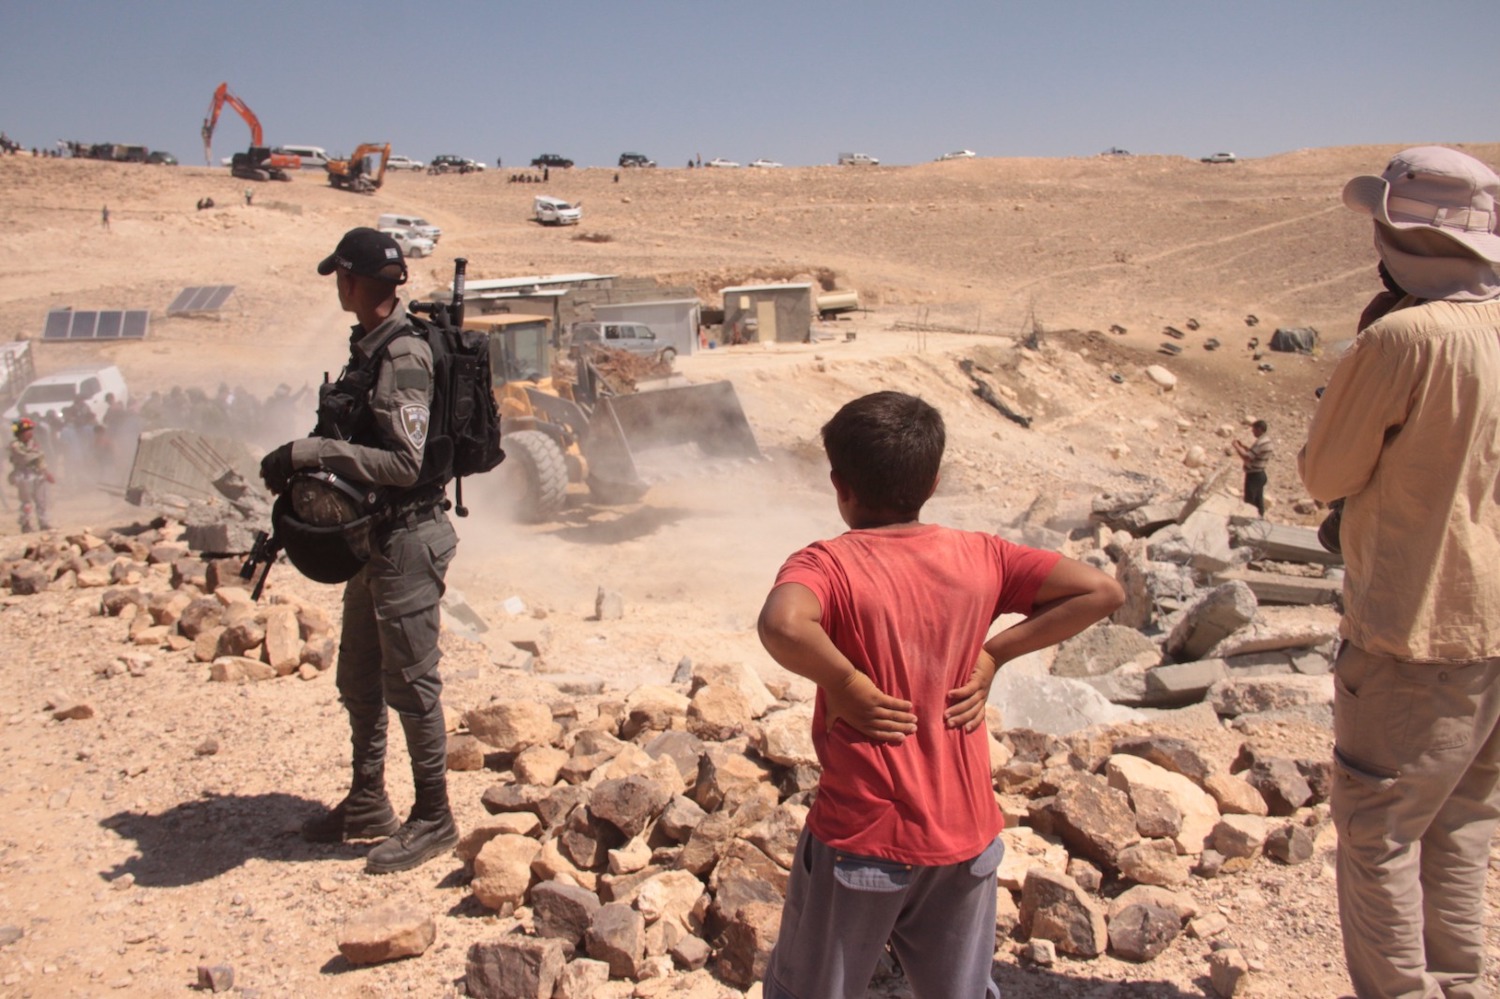 Palestinians look on as Israeli forces demolish structures in Um Qusa, Masafer Yatta, July 4, 2022. (Basil Adraa/Activestills.org)